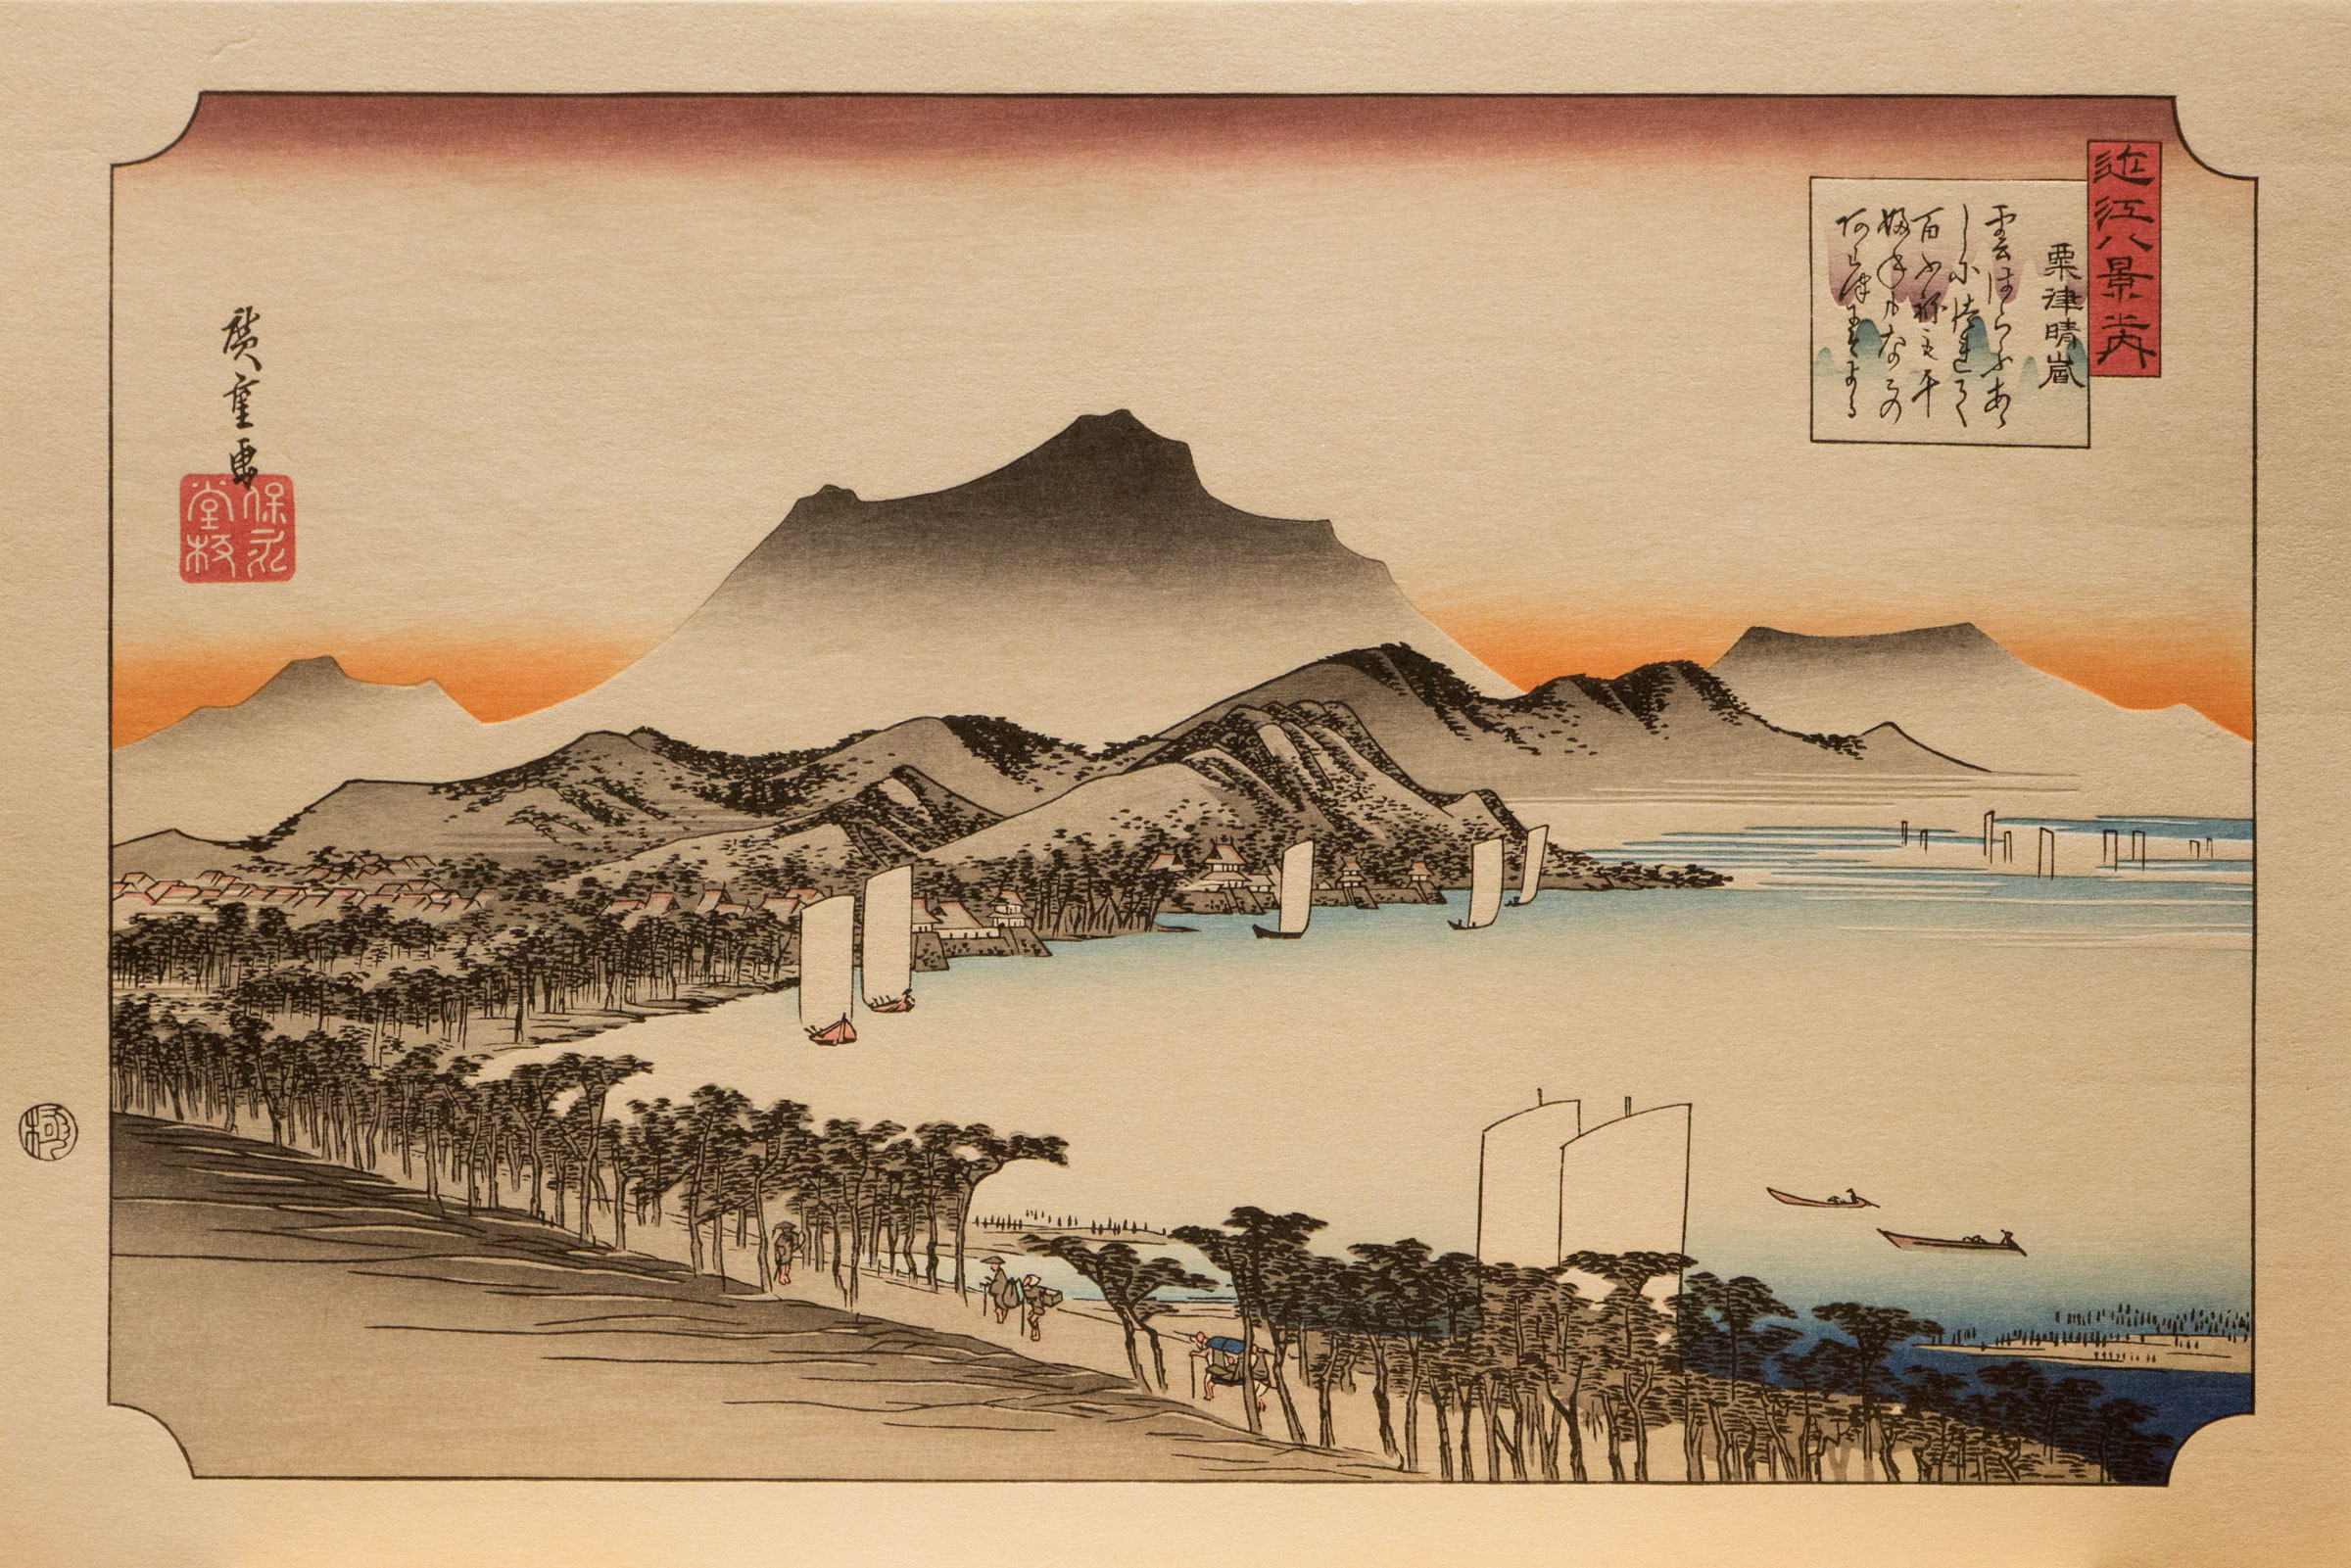 General 2400x1601 Utagawa Hiroshige woodblock print Japanese Art traditional art mountains boat trees shore evening glow lake hills digital art